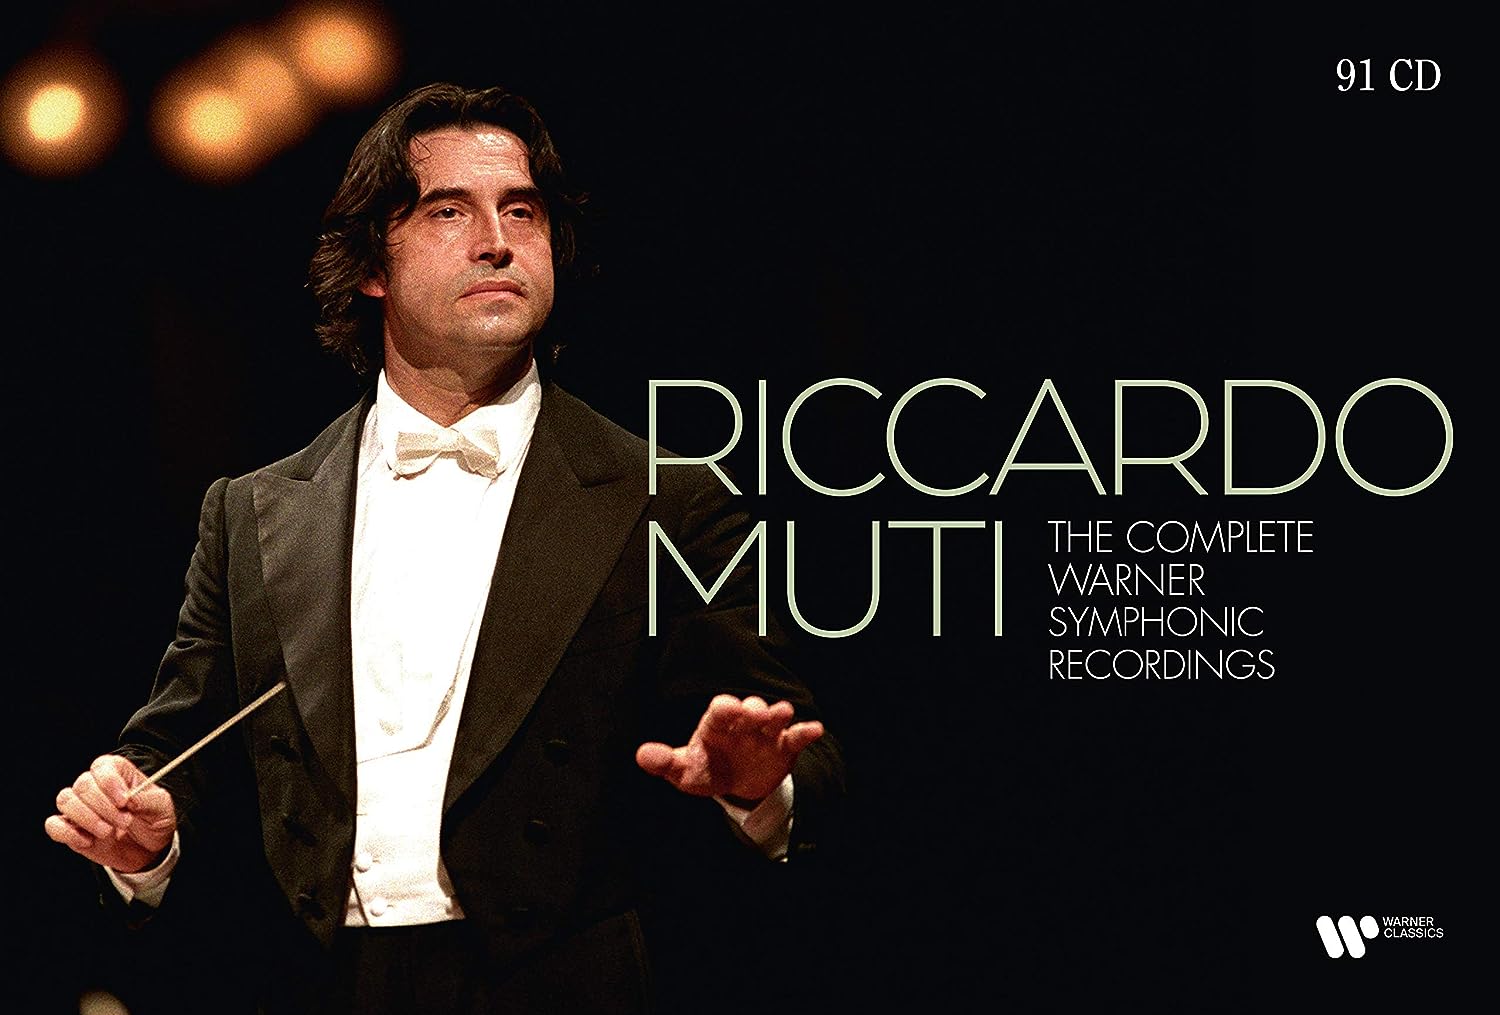 Riccardo Muti - The Complete Warner Symphonic Recordings (91 CDs Box Set) | Riccardo Muti